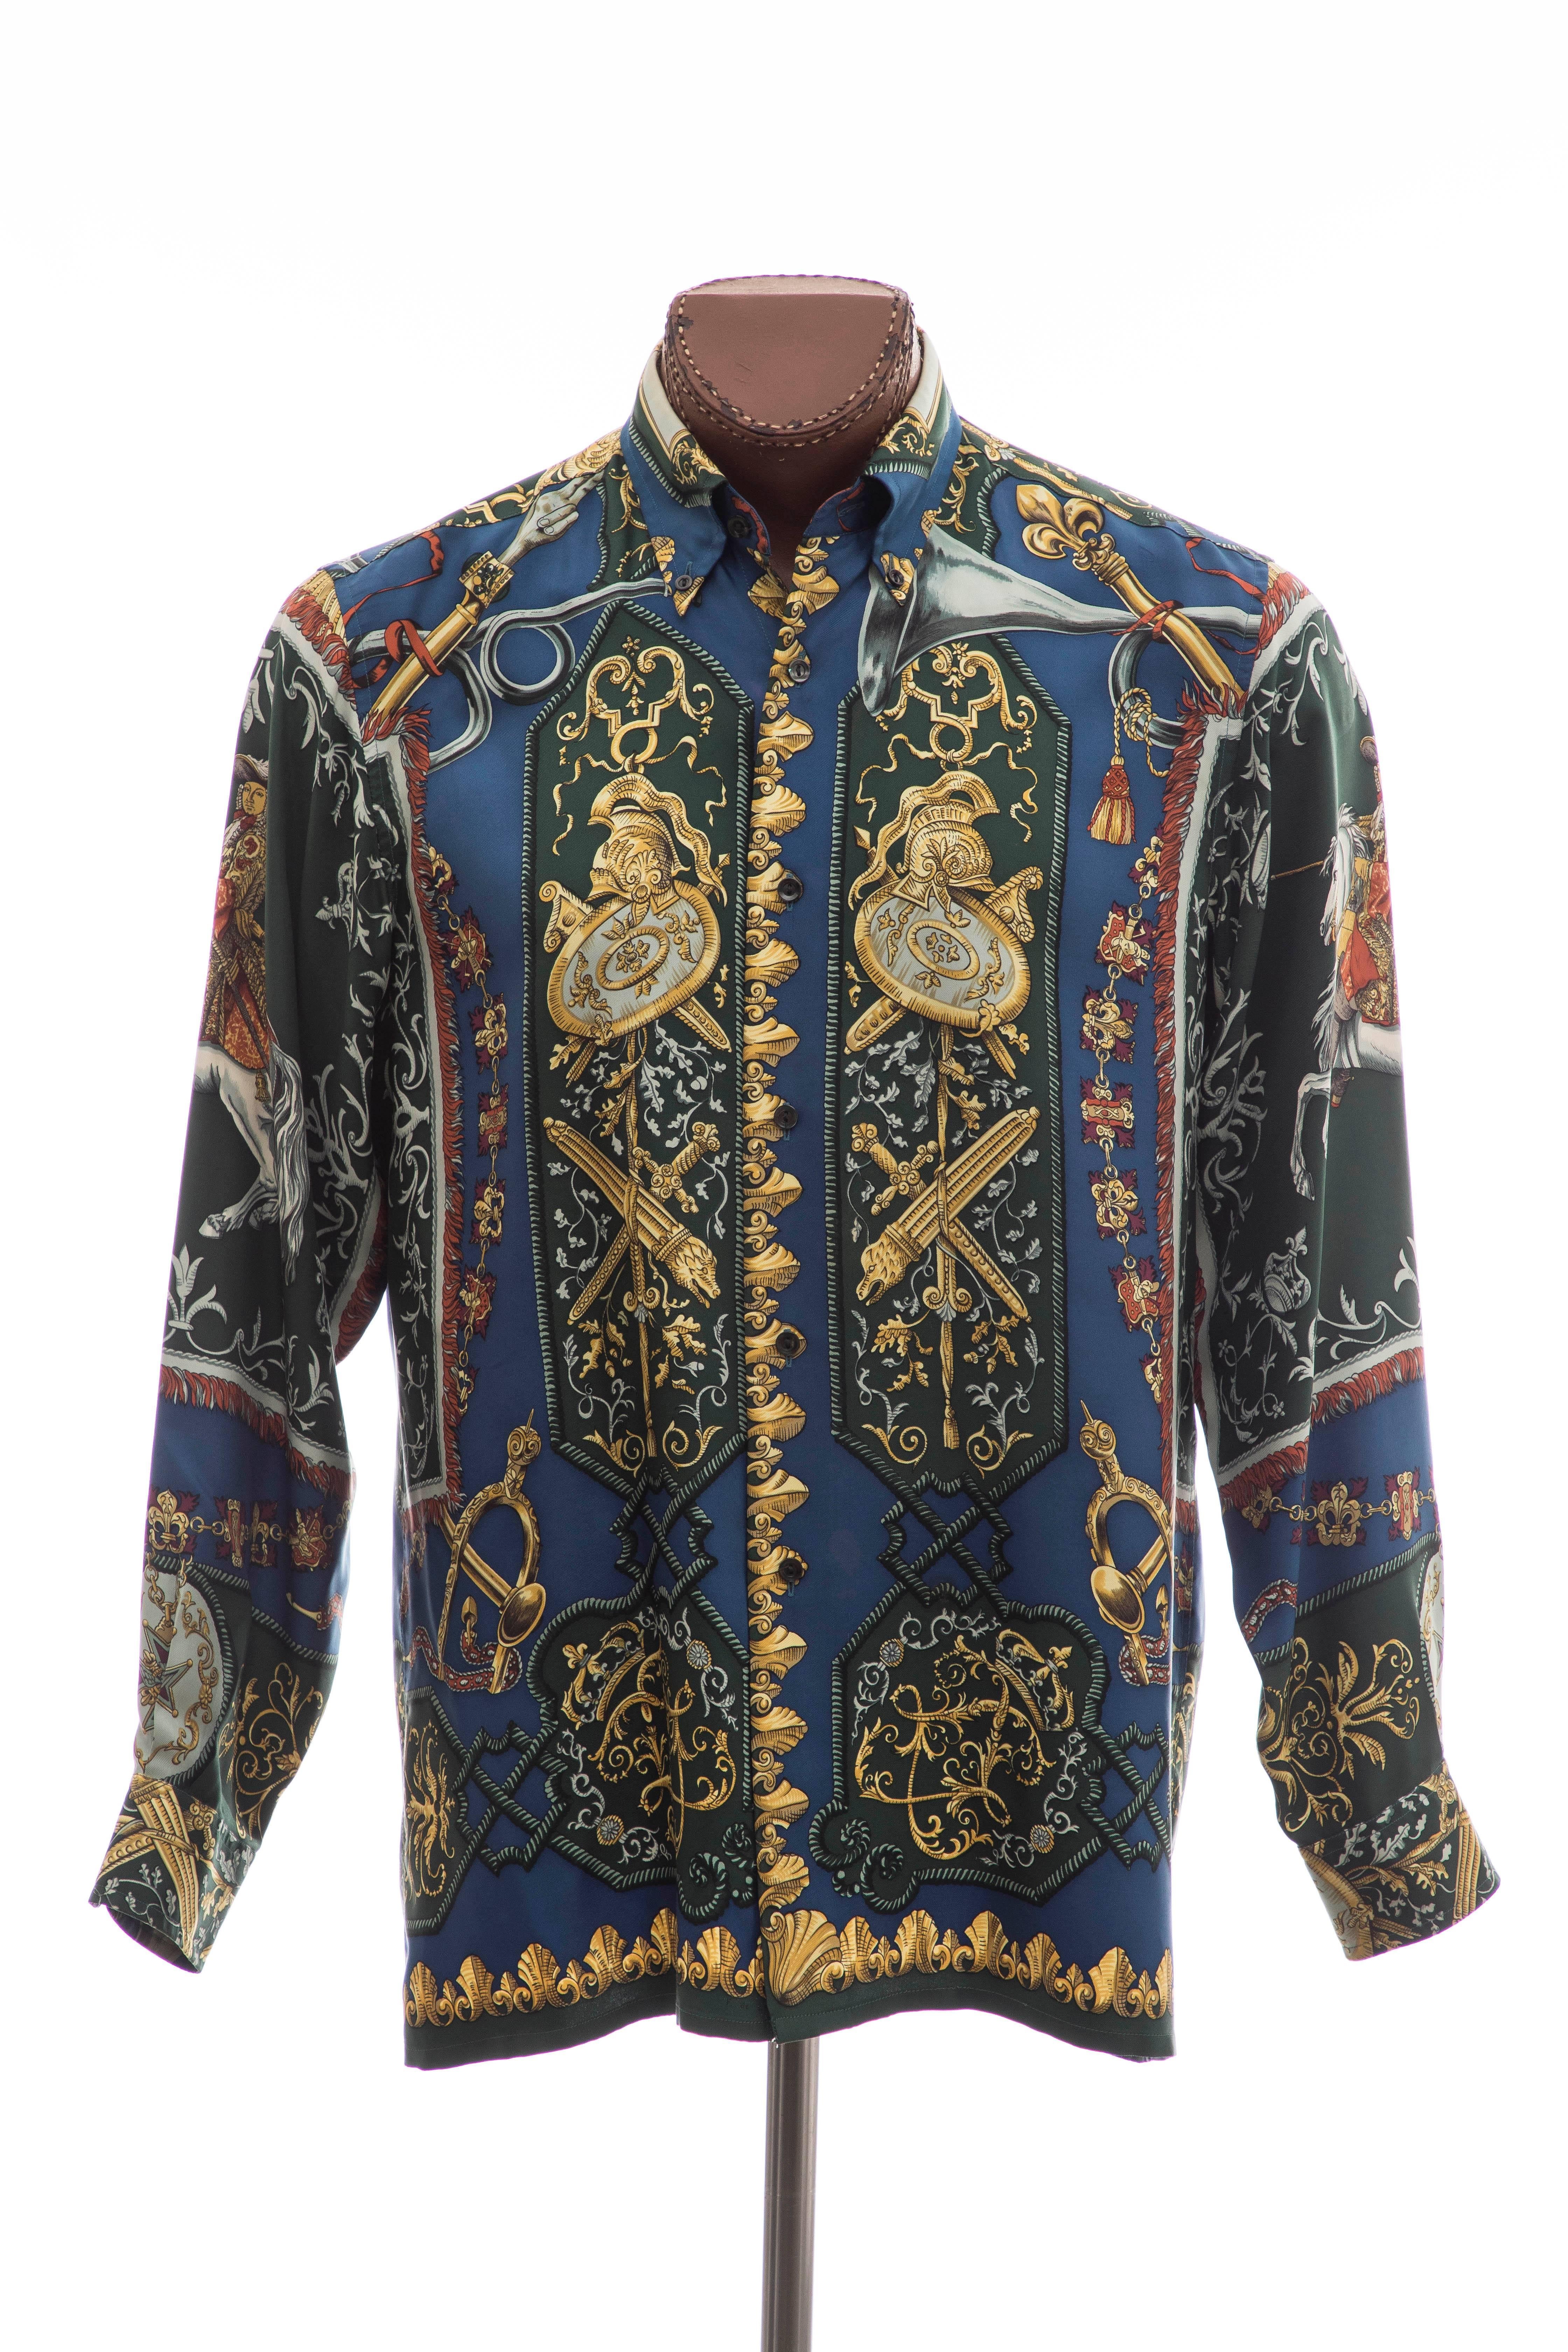 Hermès Men's Printed Silk Button Front Shirt, Circa 1970s 4